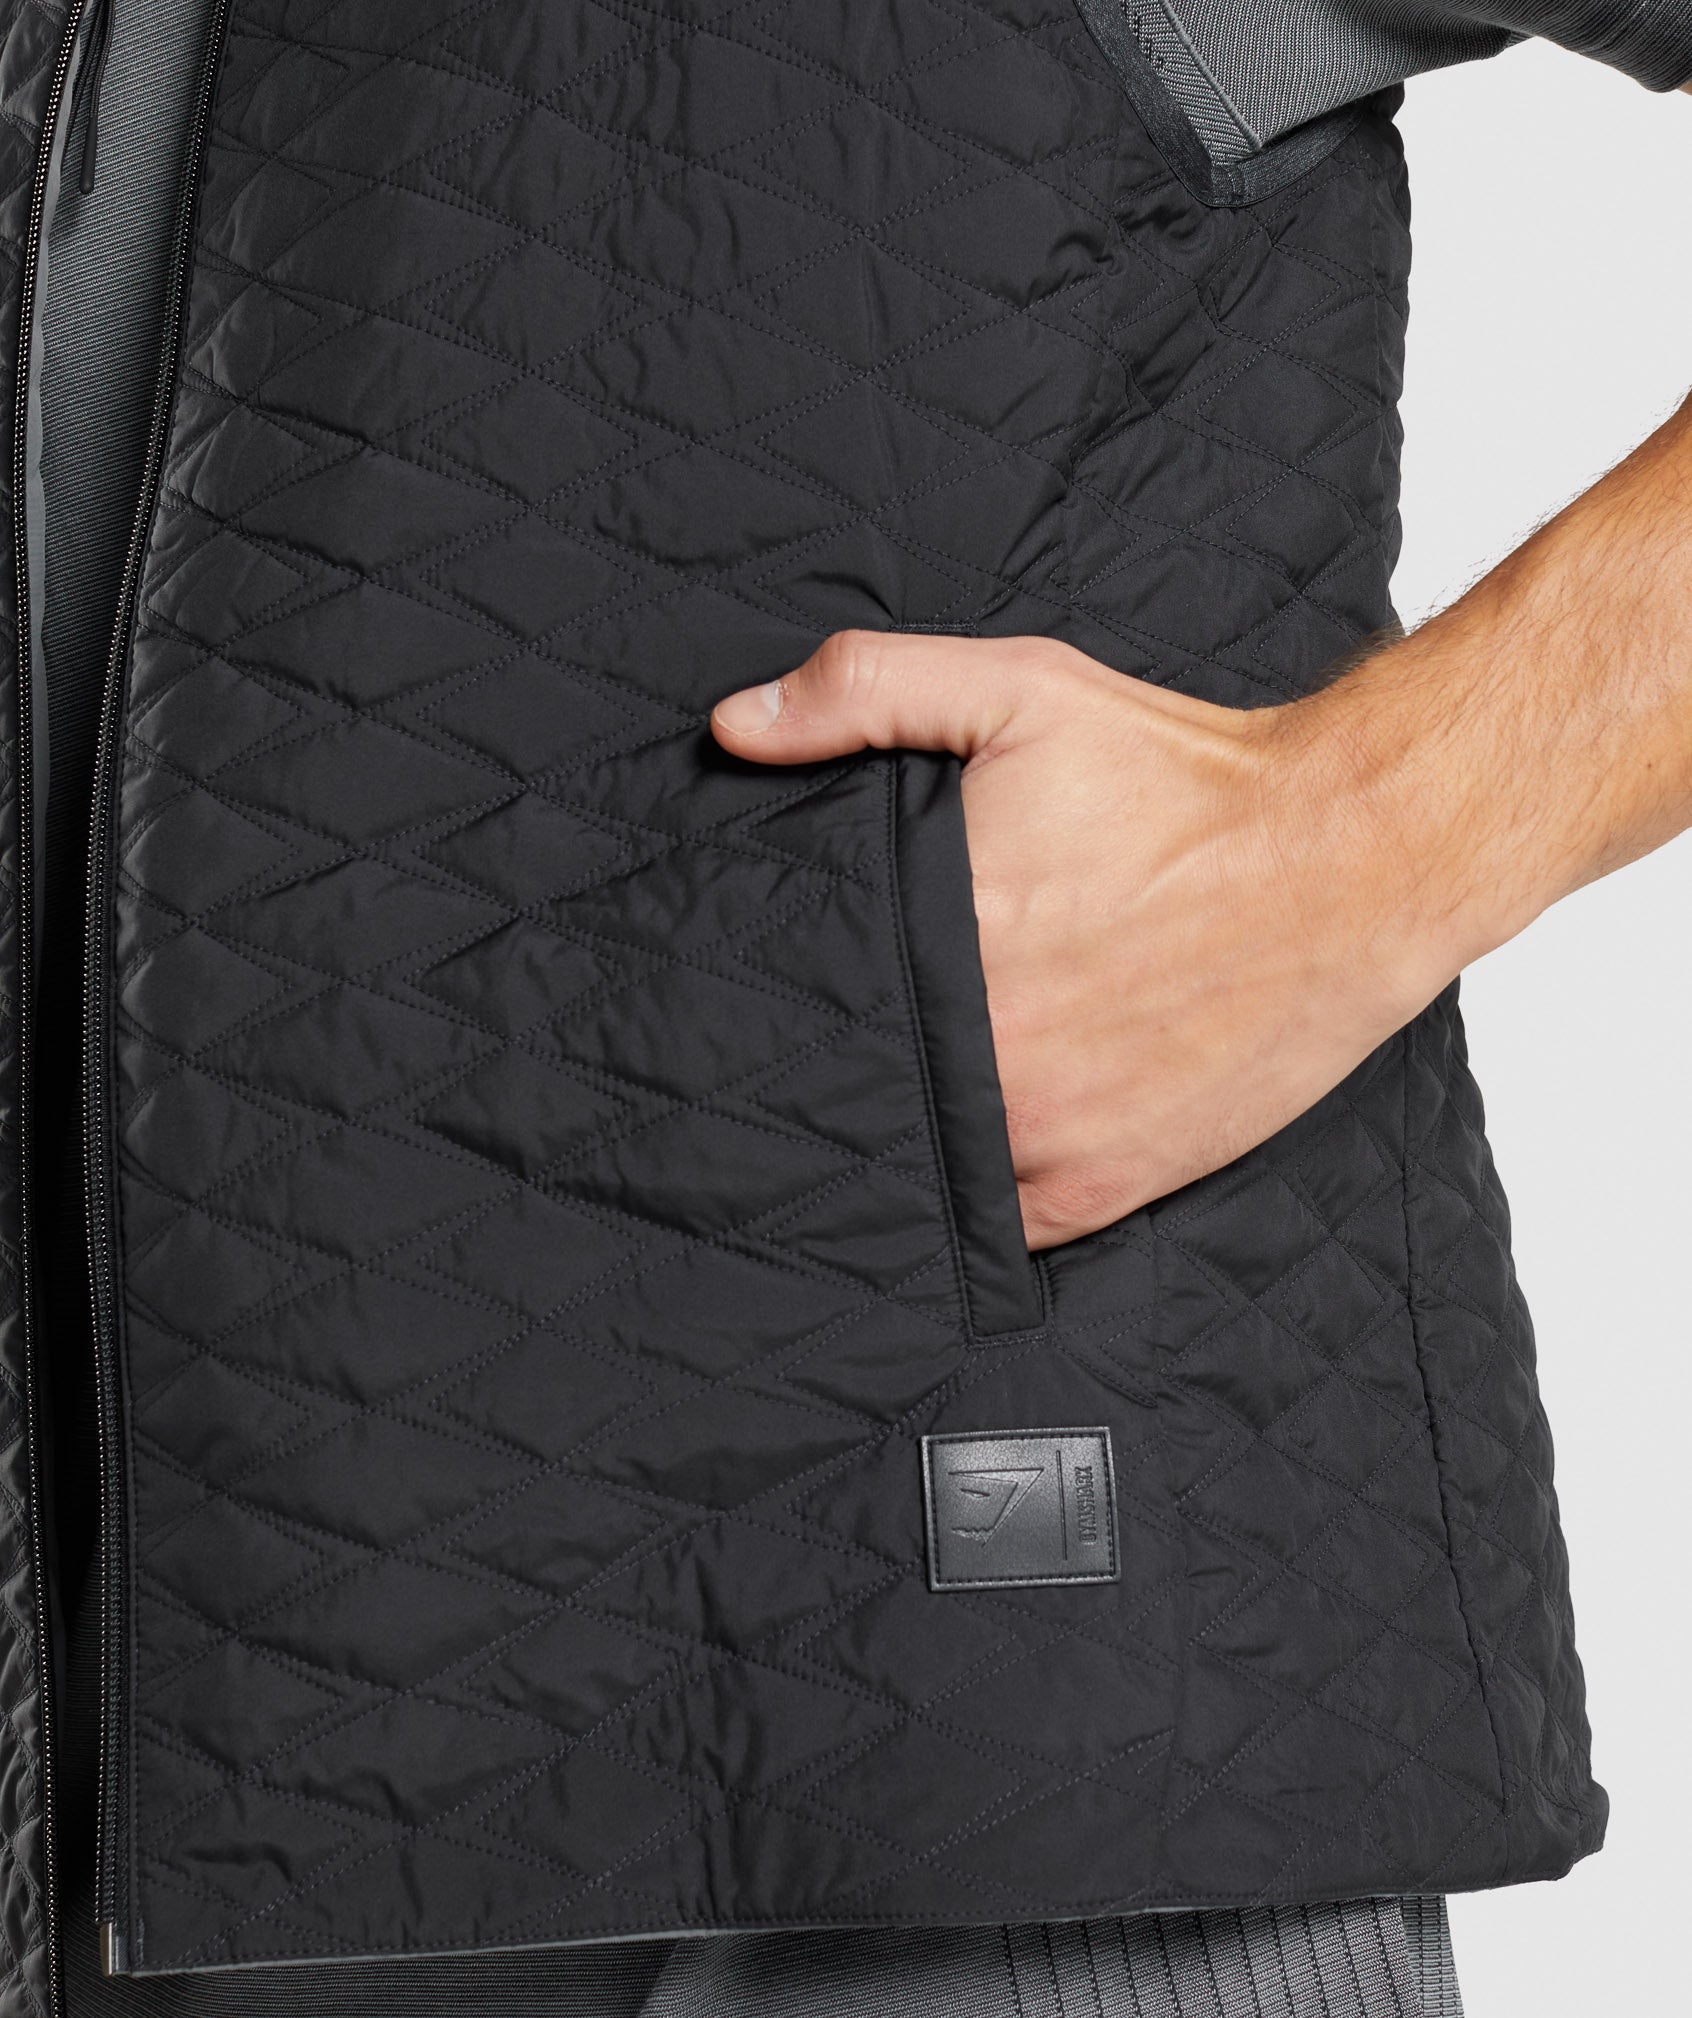 Retake Reversible Vest in Charcoal/Black - view 6